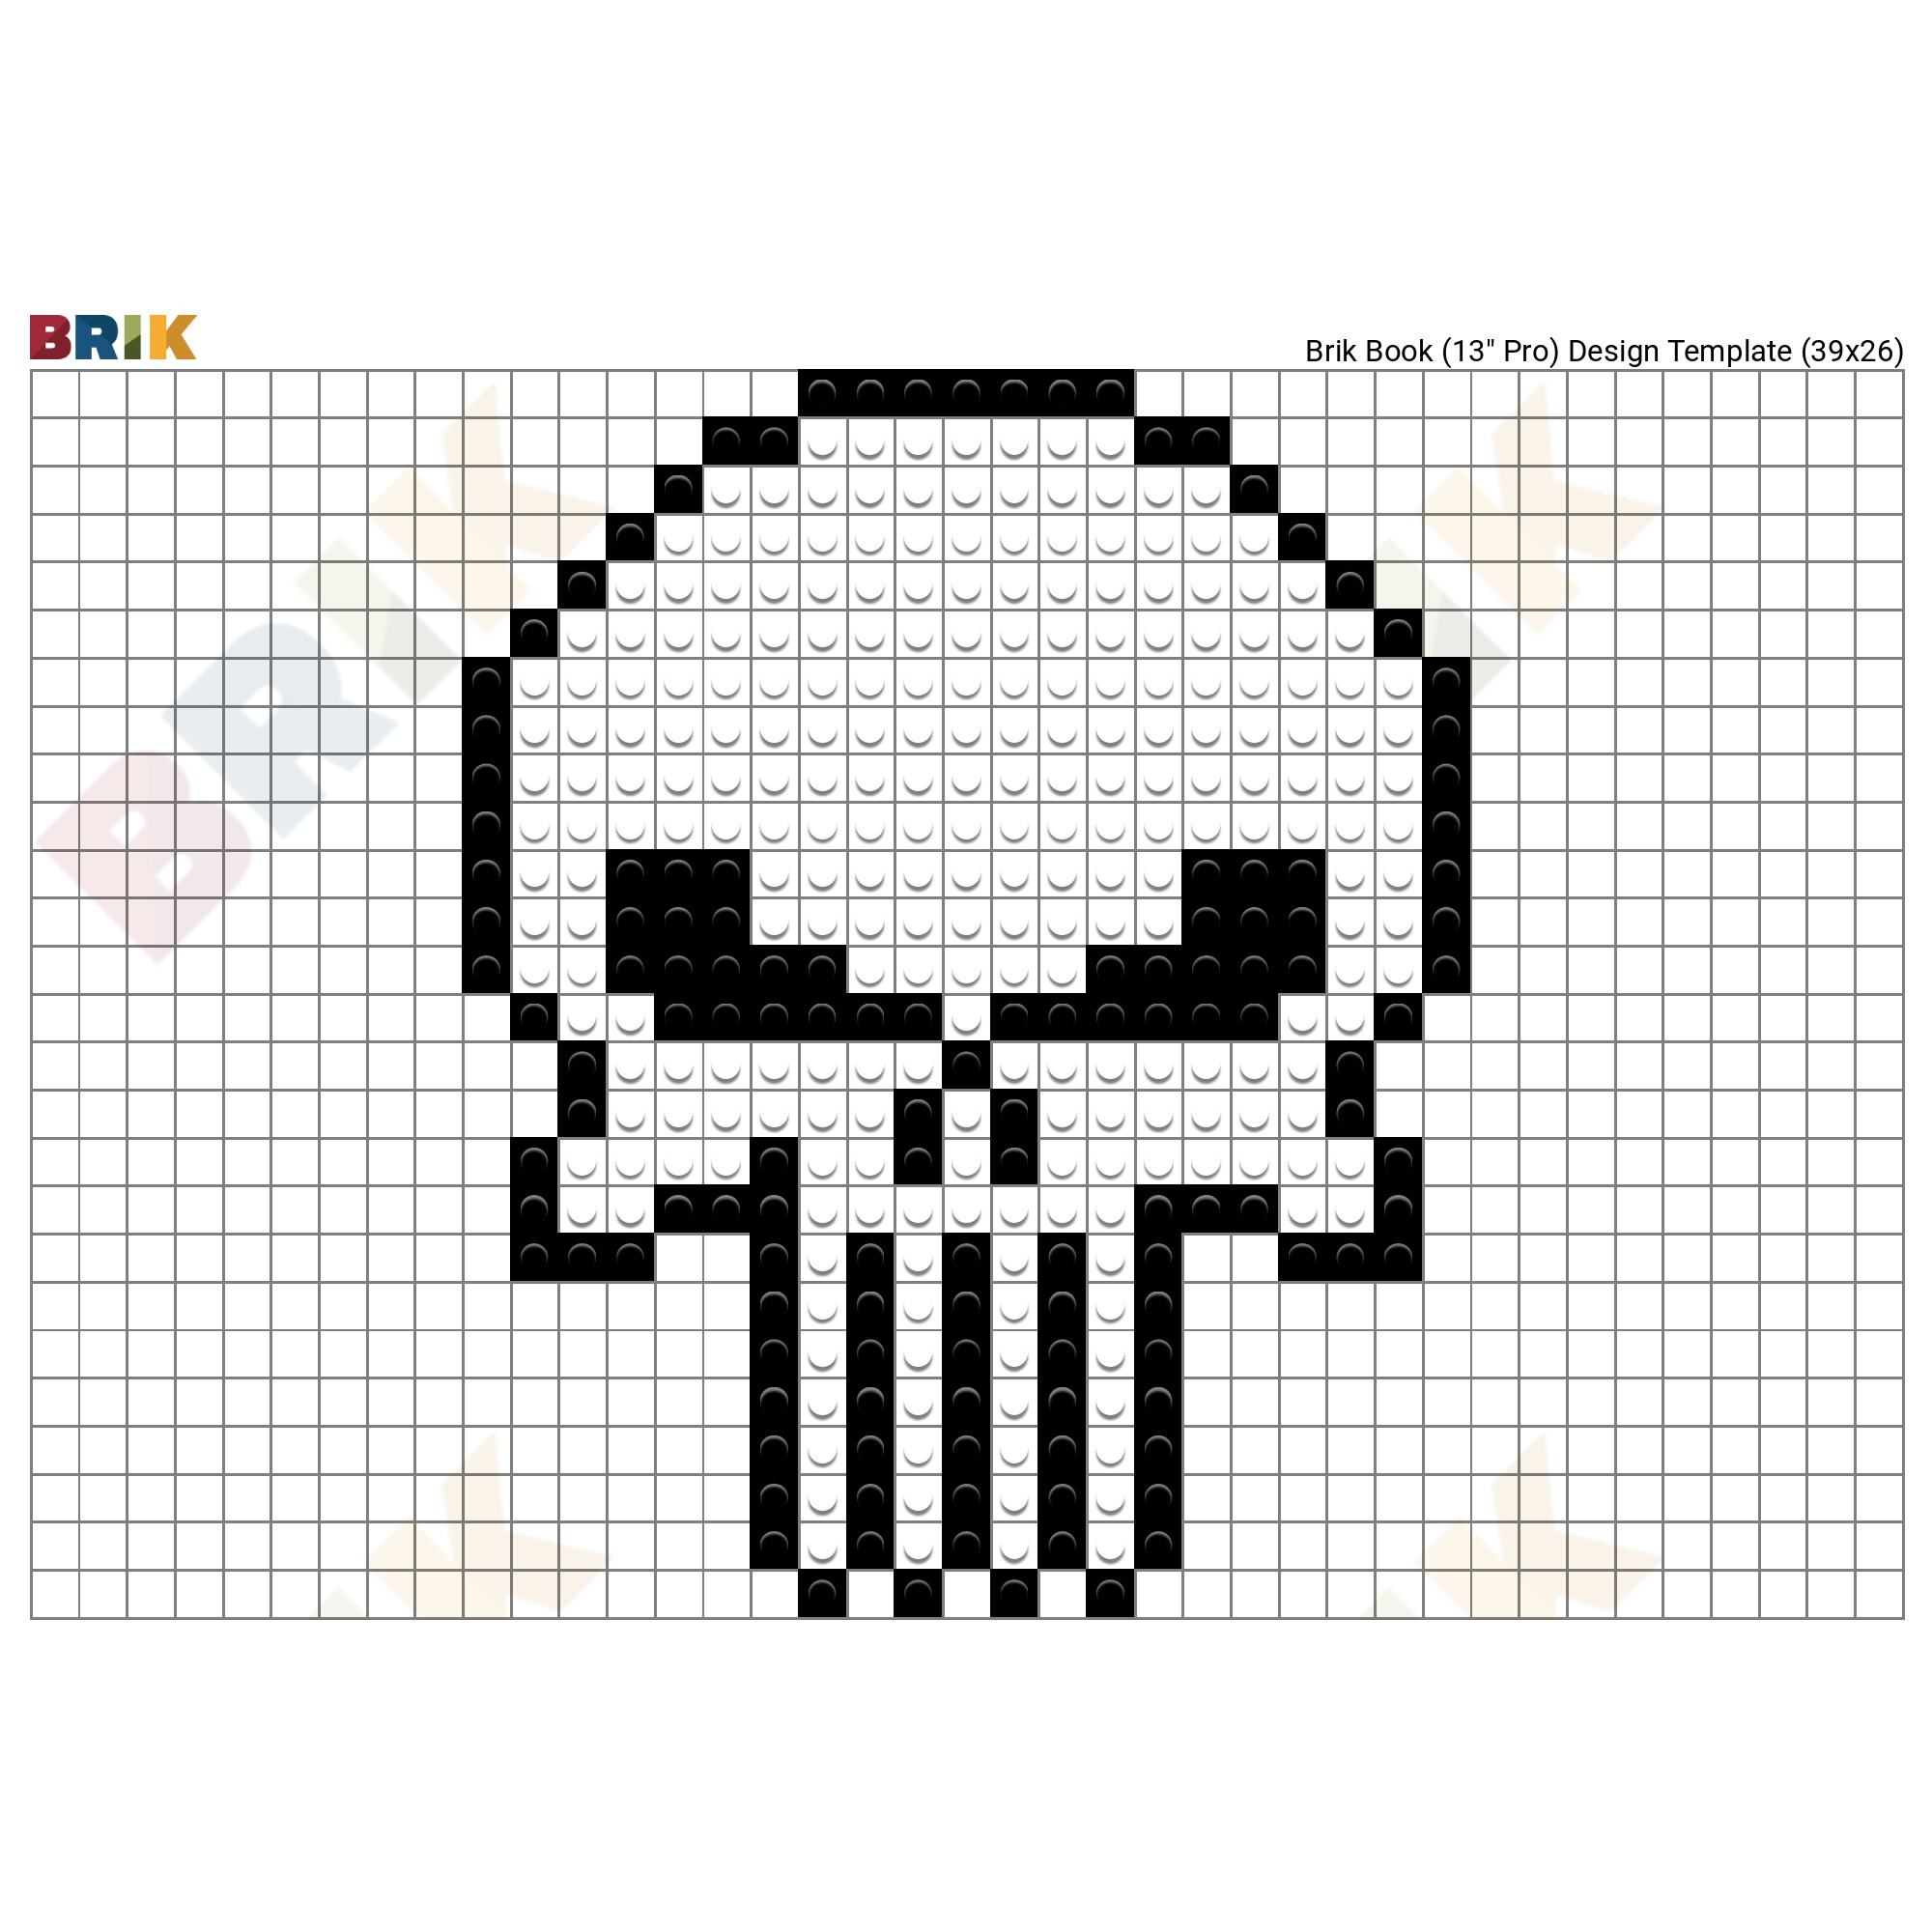 Skull pixel art grid